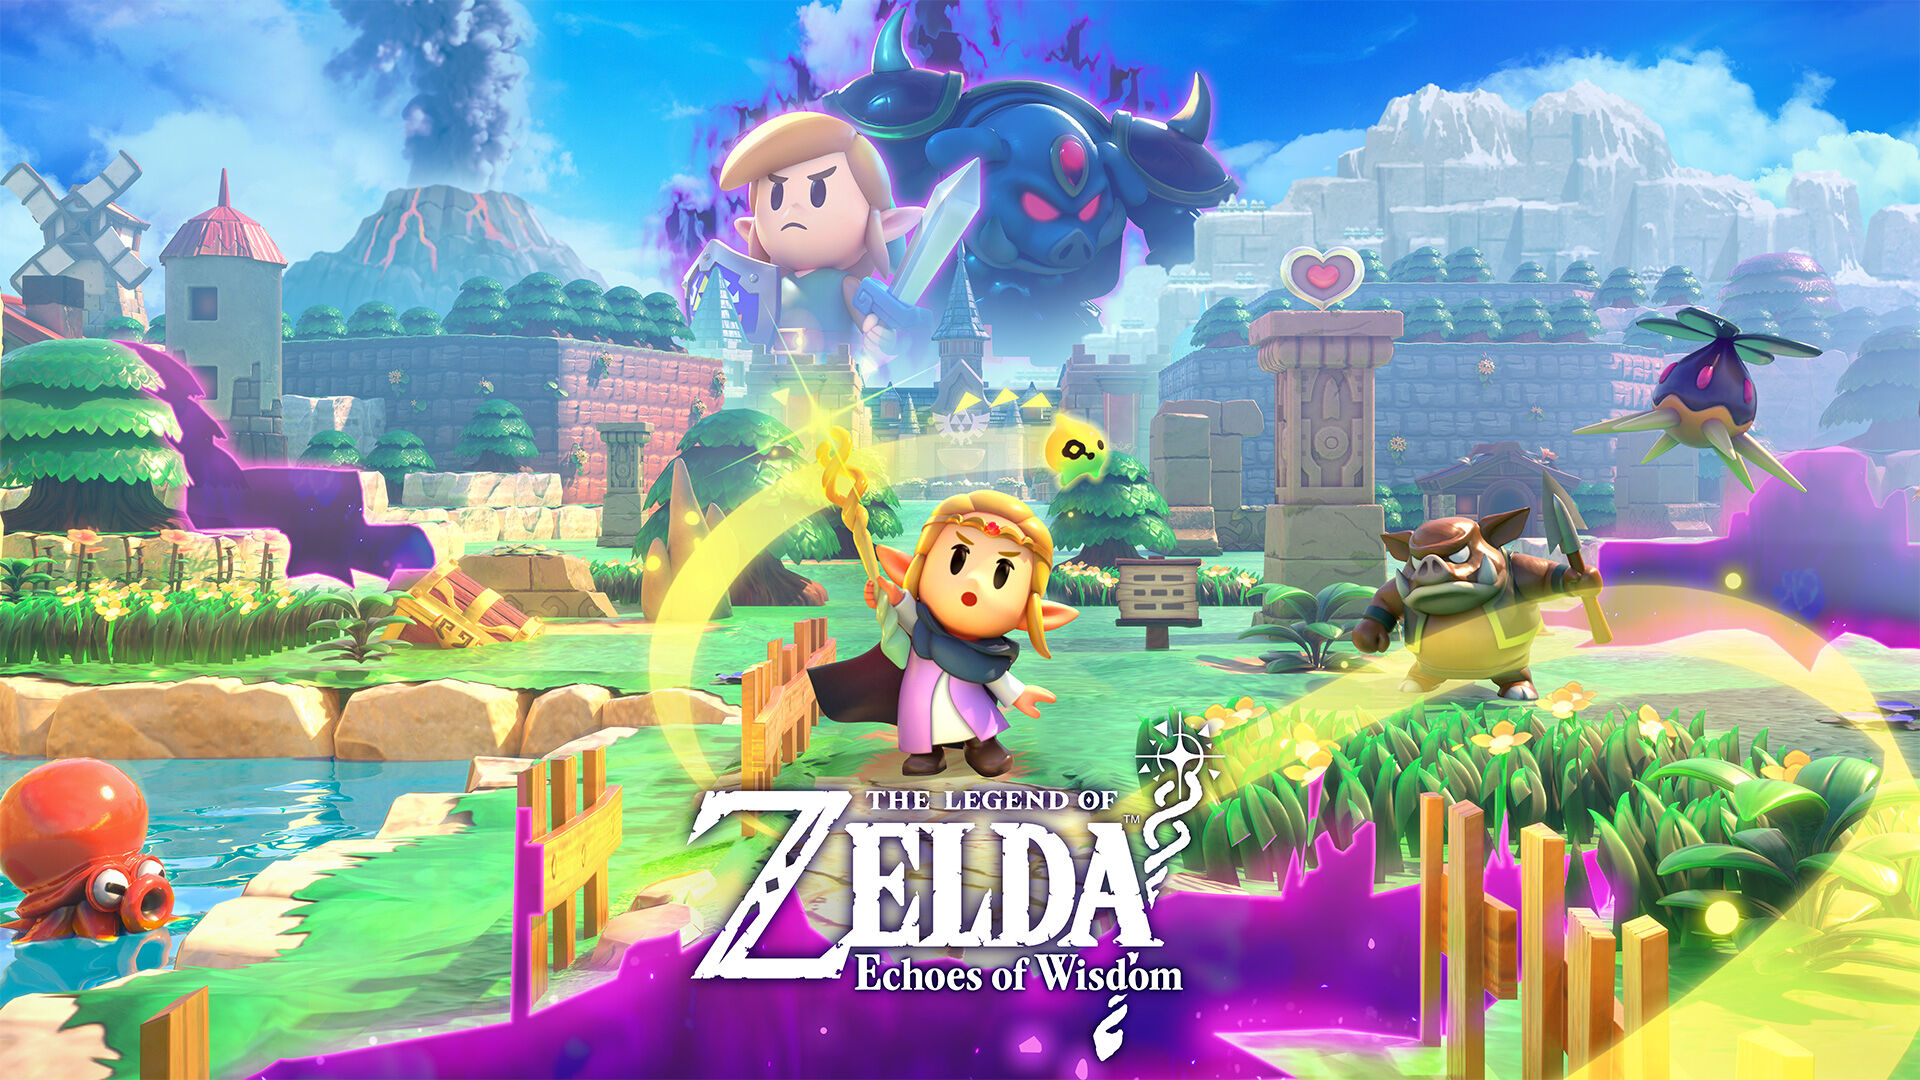 Nintendo announces new surprise: new game where you can finally play as Princess Zelda